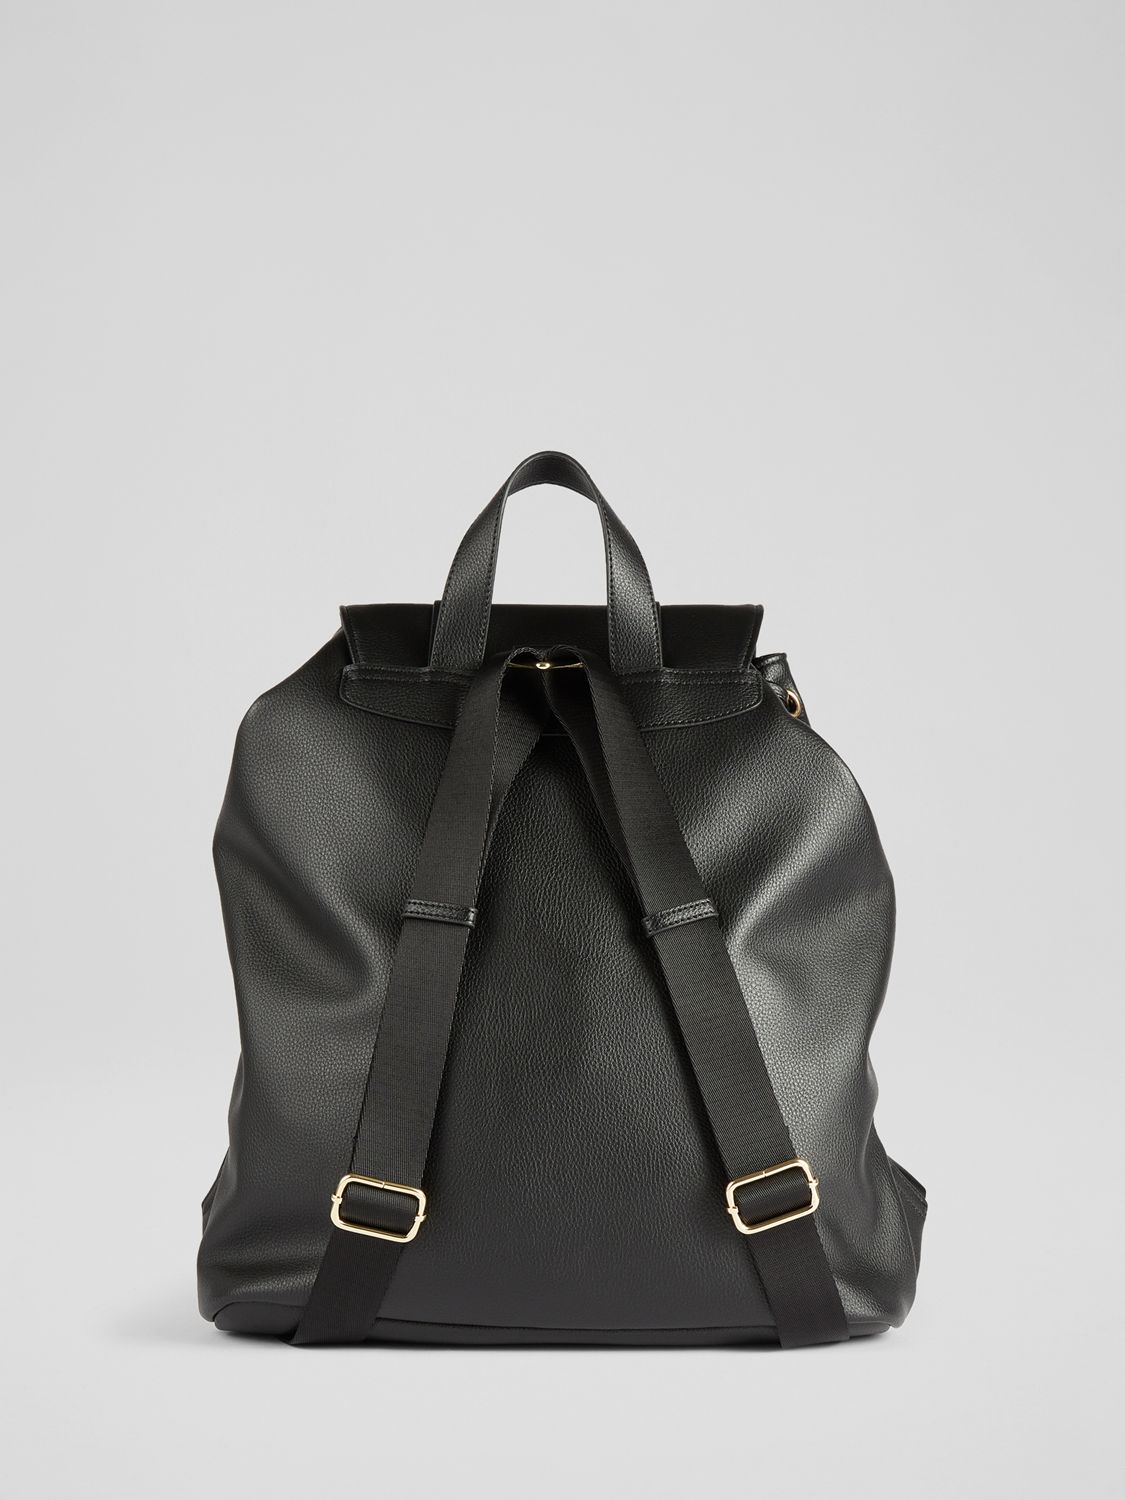 L.K.Bennett Billie Leather Backpack, Black at John Lewis & Partners